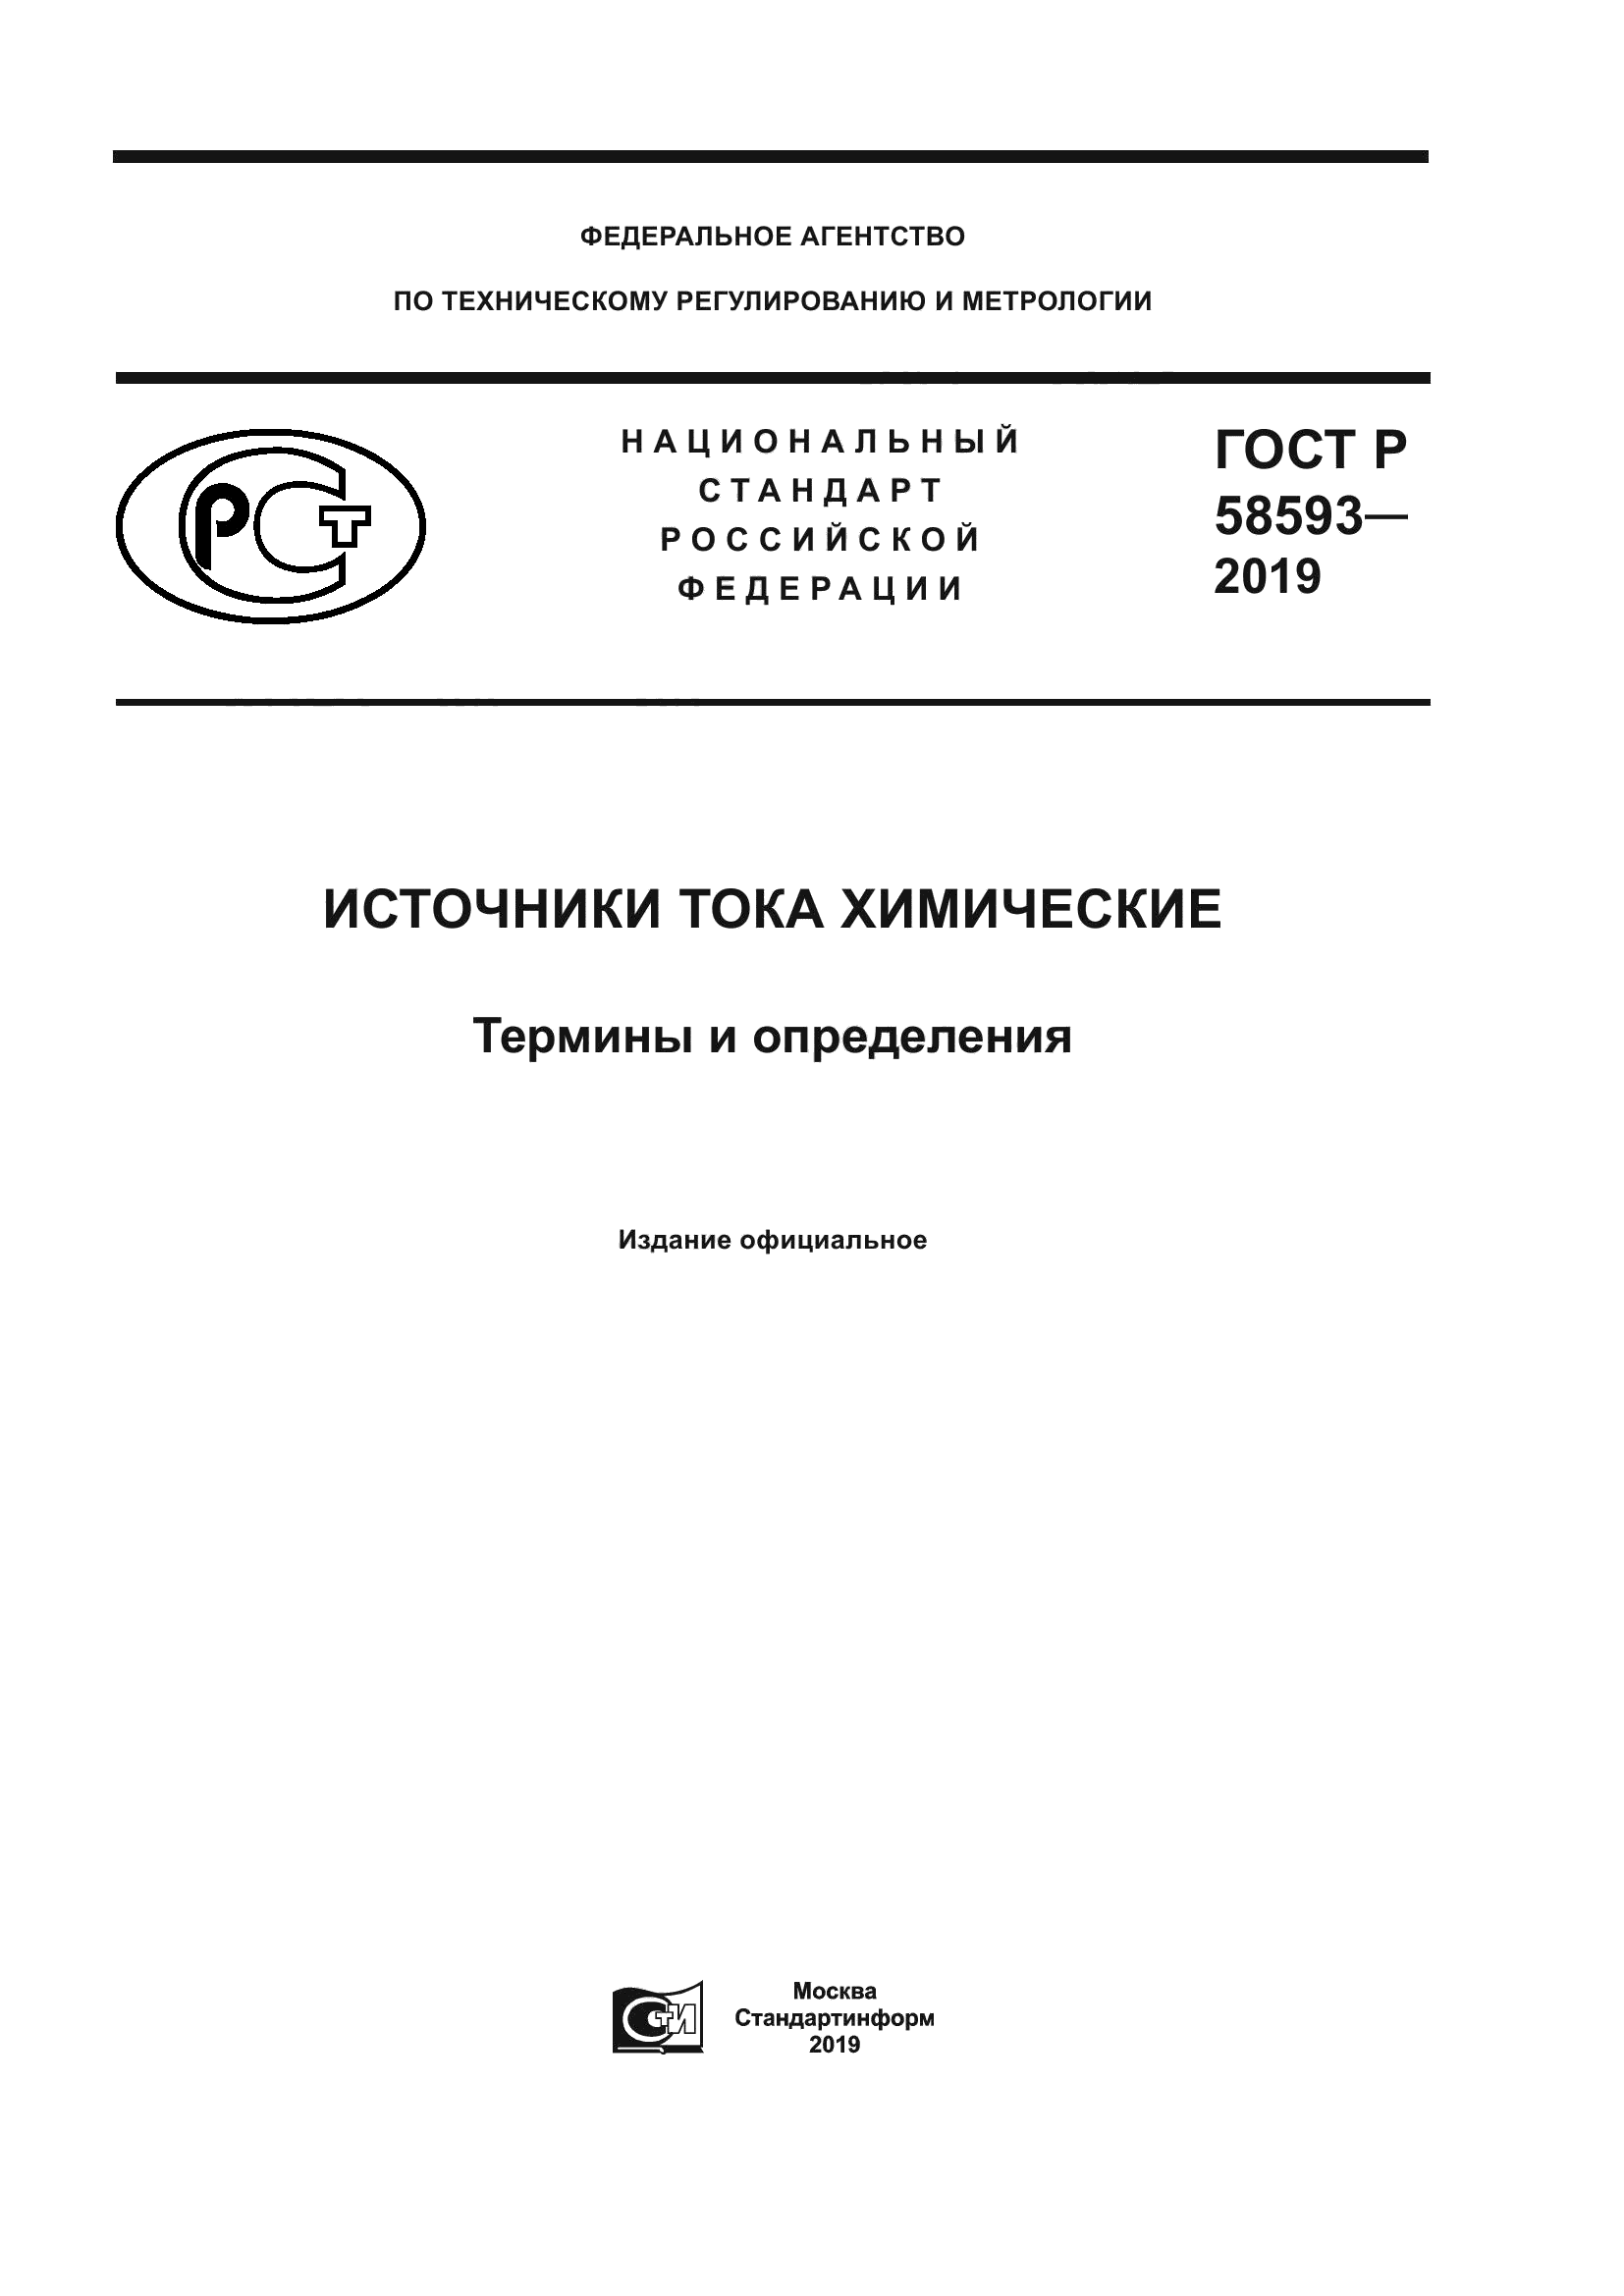 ГОСТ Р 58593-2019